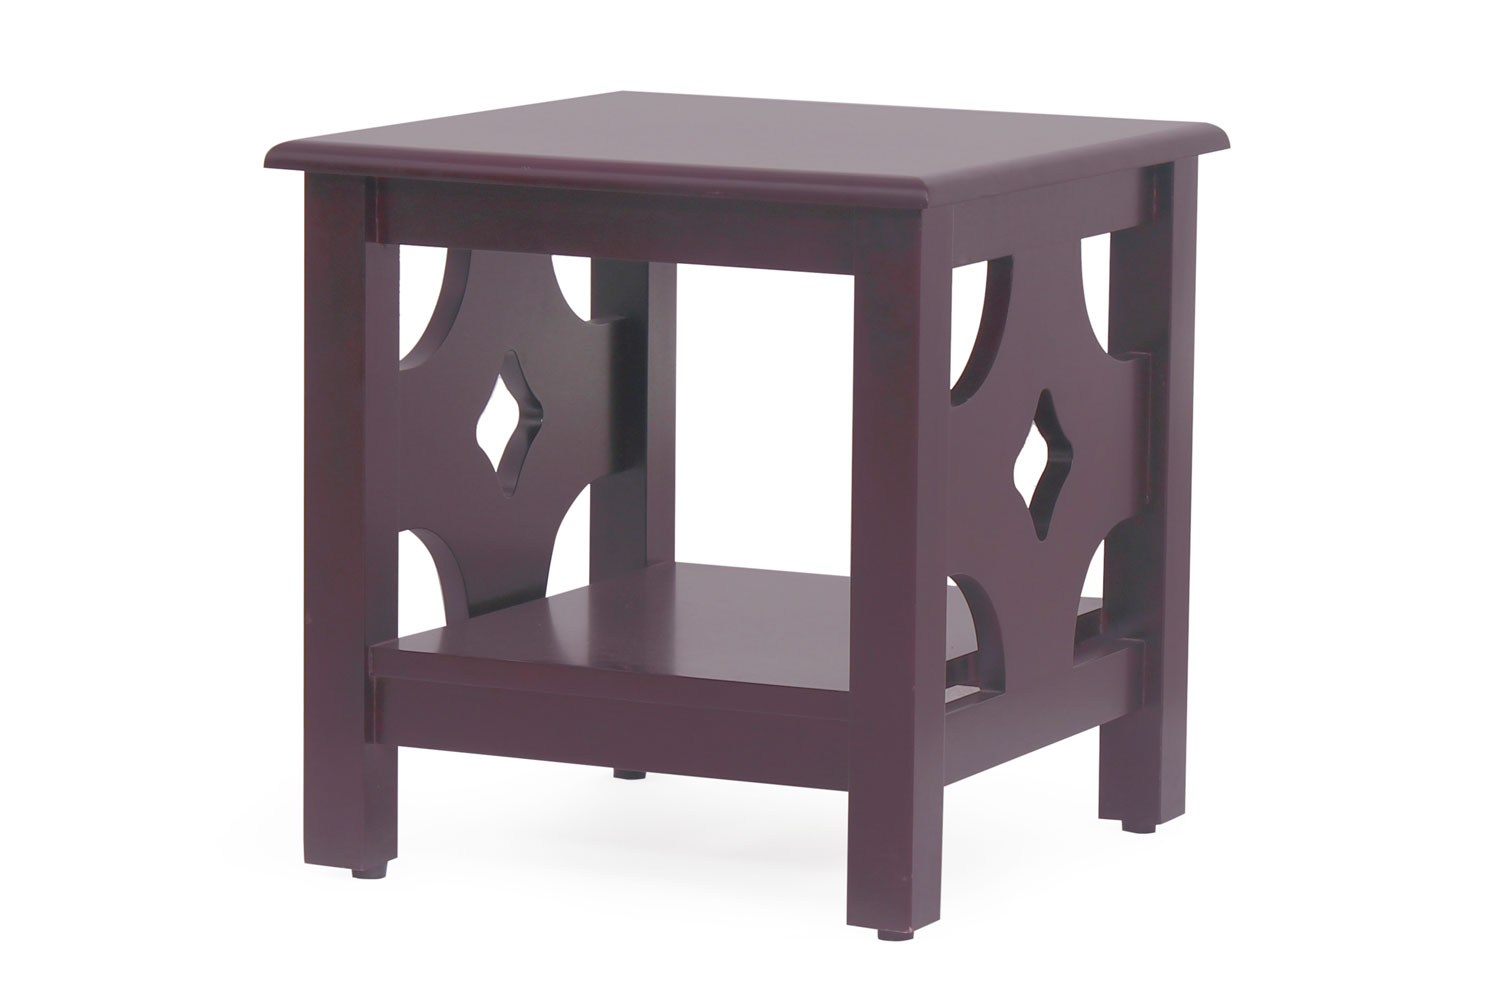 oak side table in solid wood finish